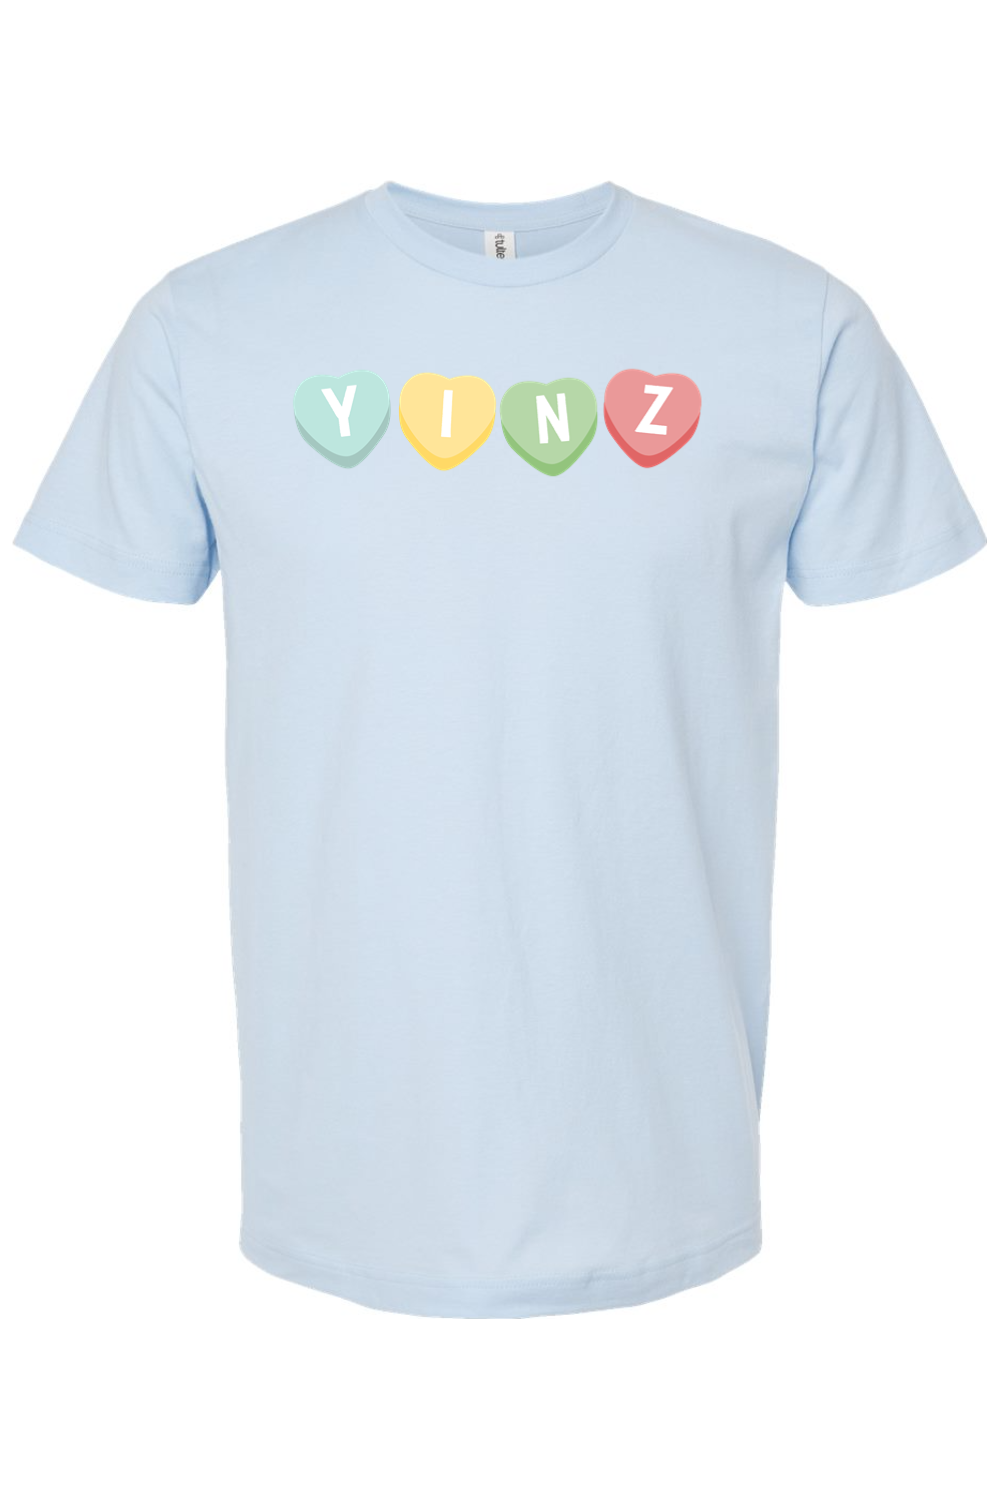 YINZ - Candy Conversation Hearts - Yinzylvania